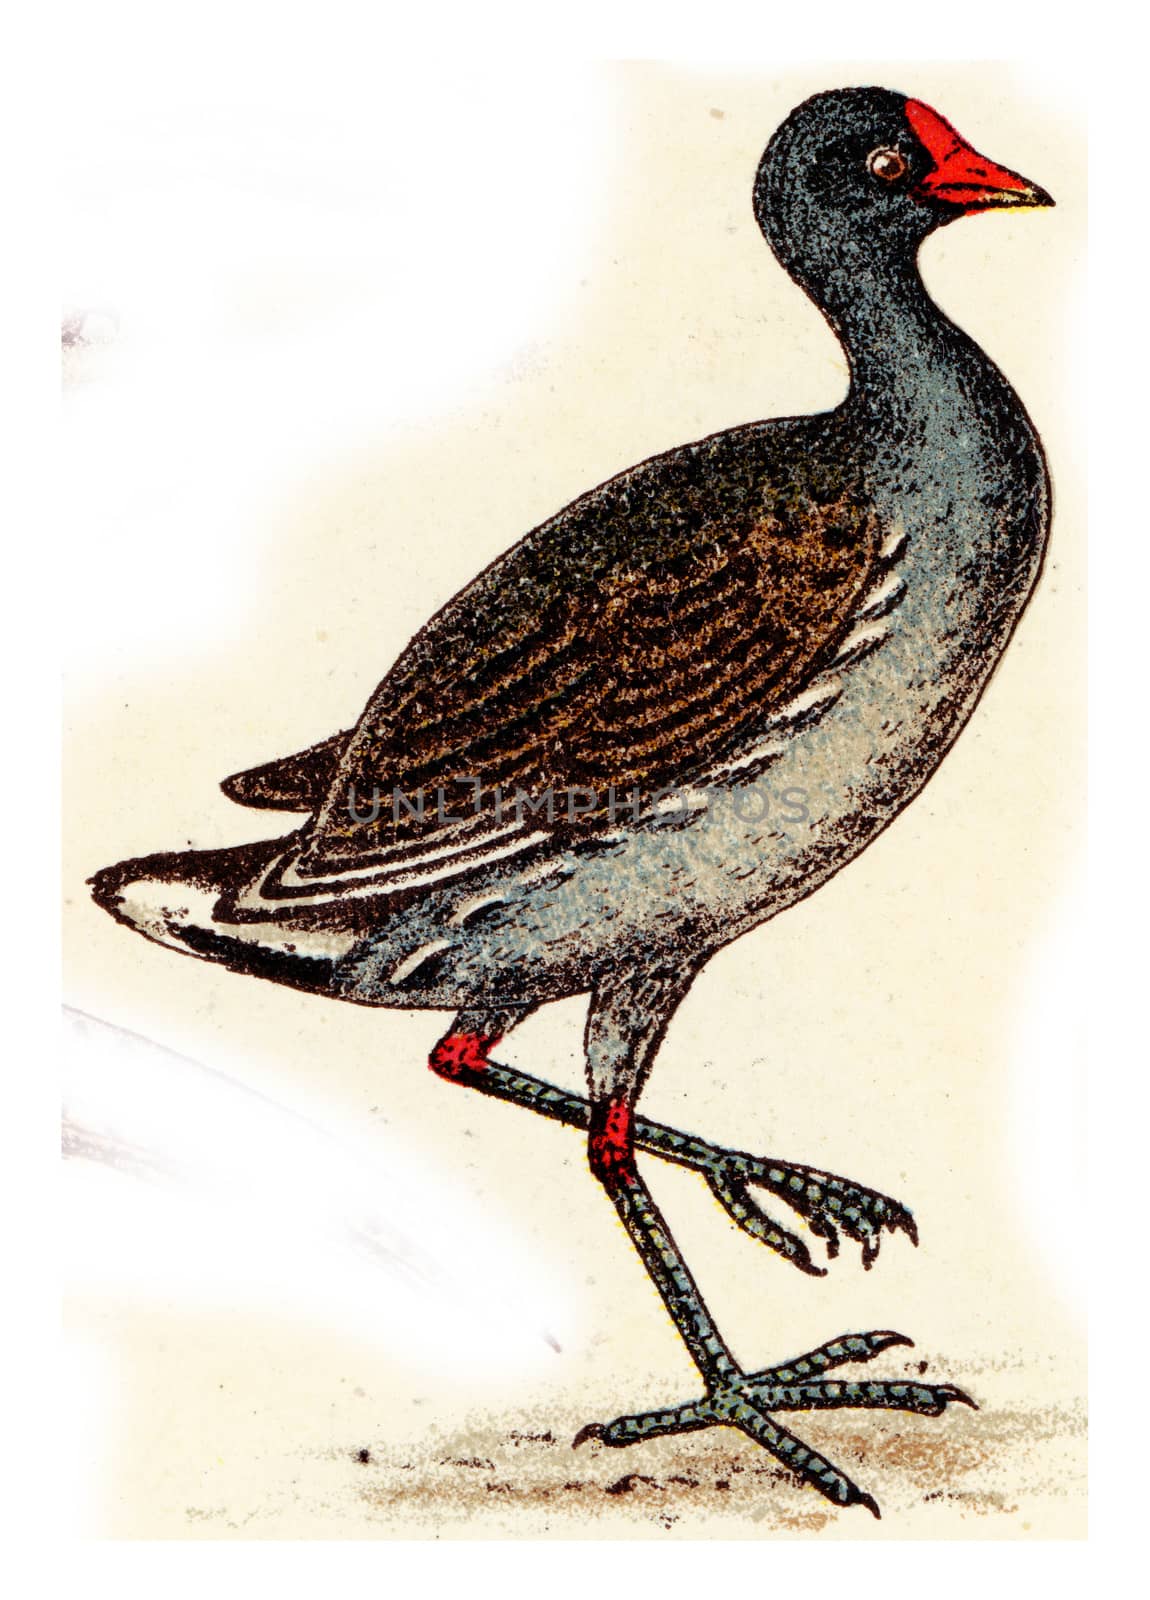 Moorhen, vintage engraved illustration. From Deutch Birds of Europe Atlas.
